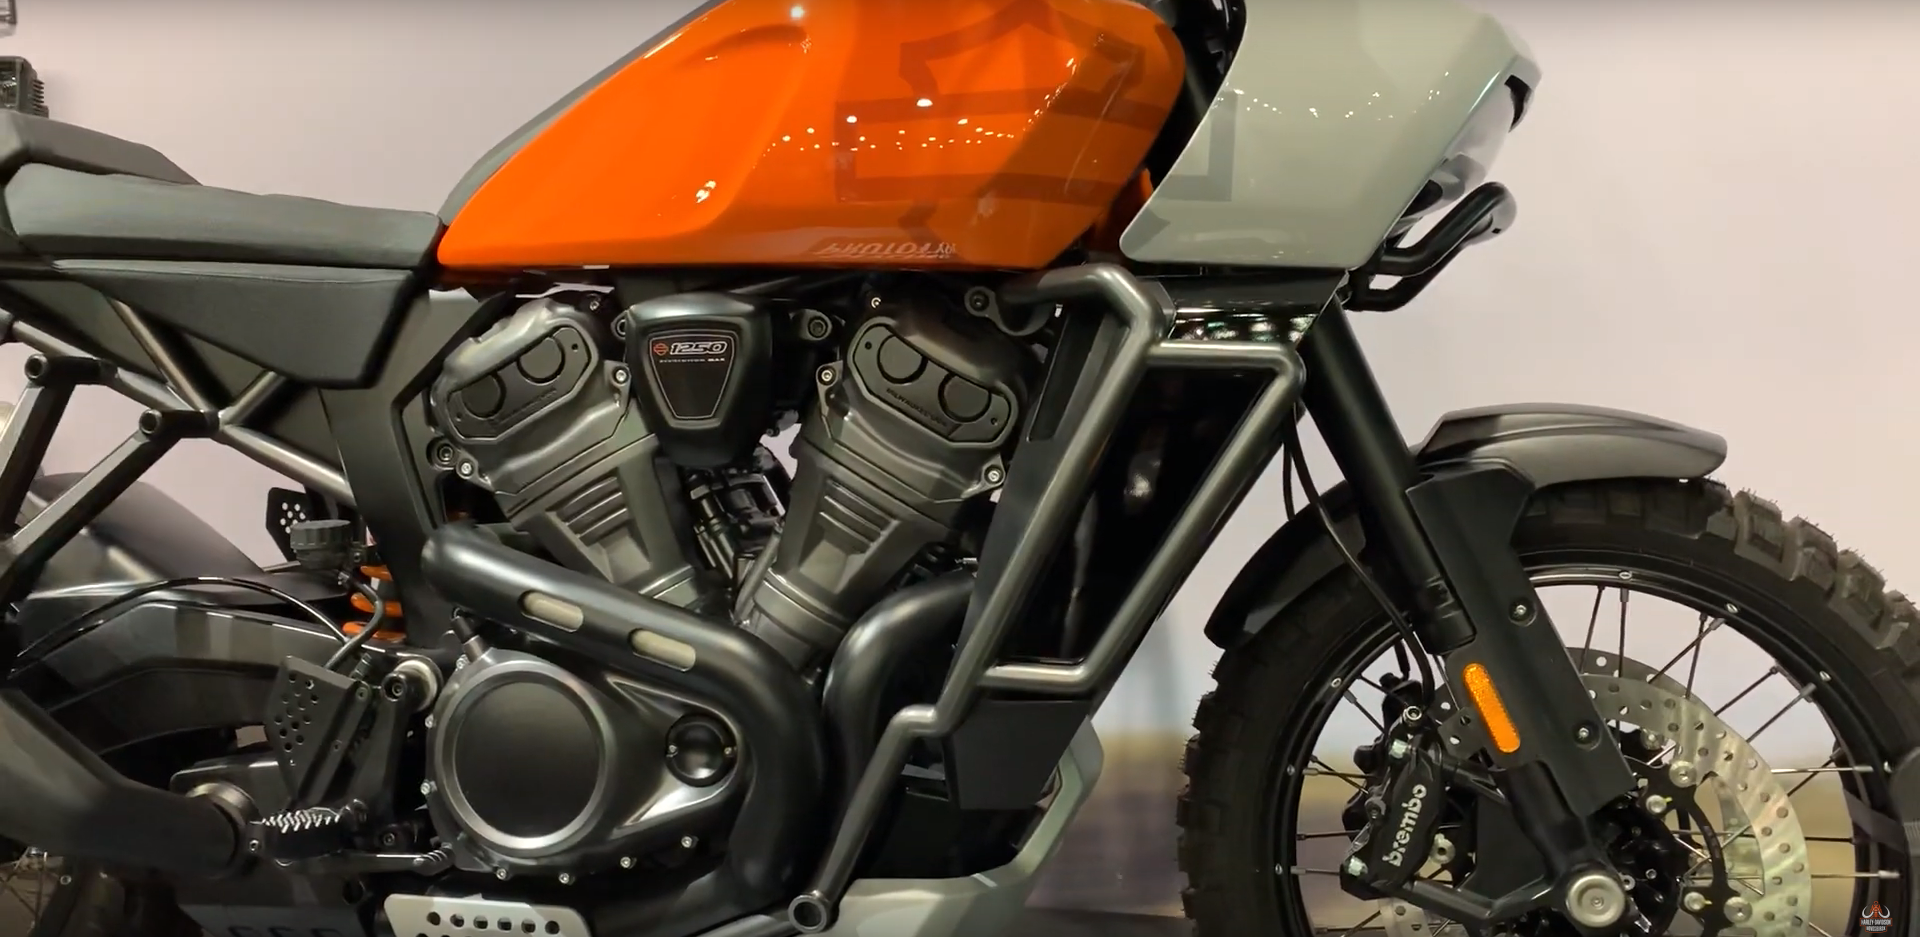 Pan America搭載Harley-Davidson全新開發的1250c.c.DOHC 60度V型雙缸引擎